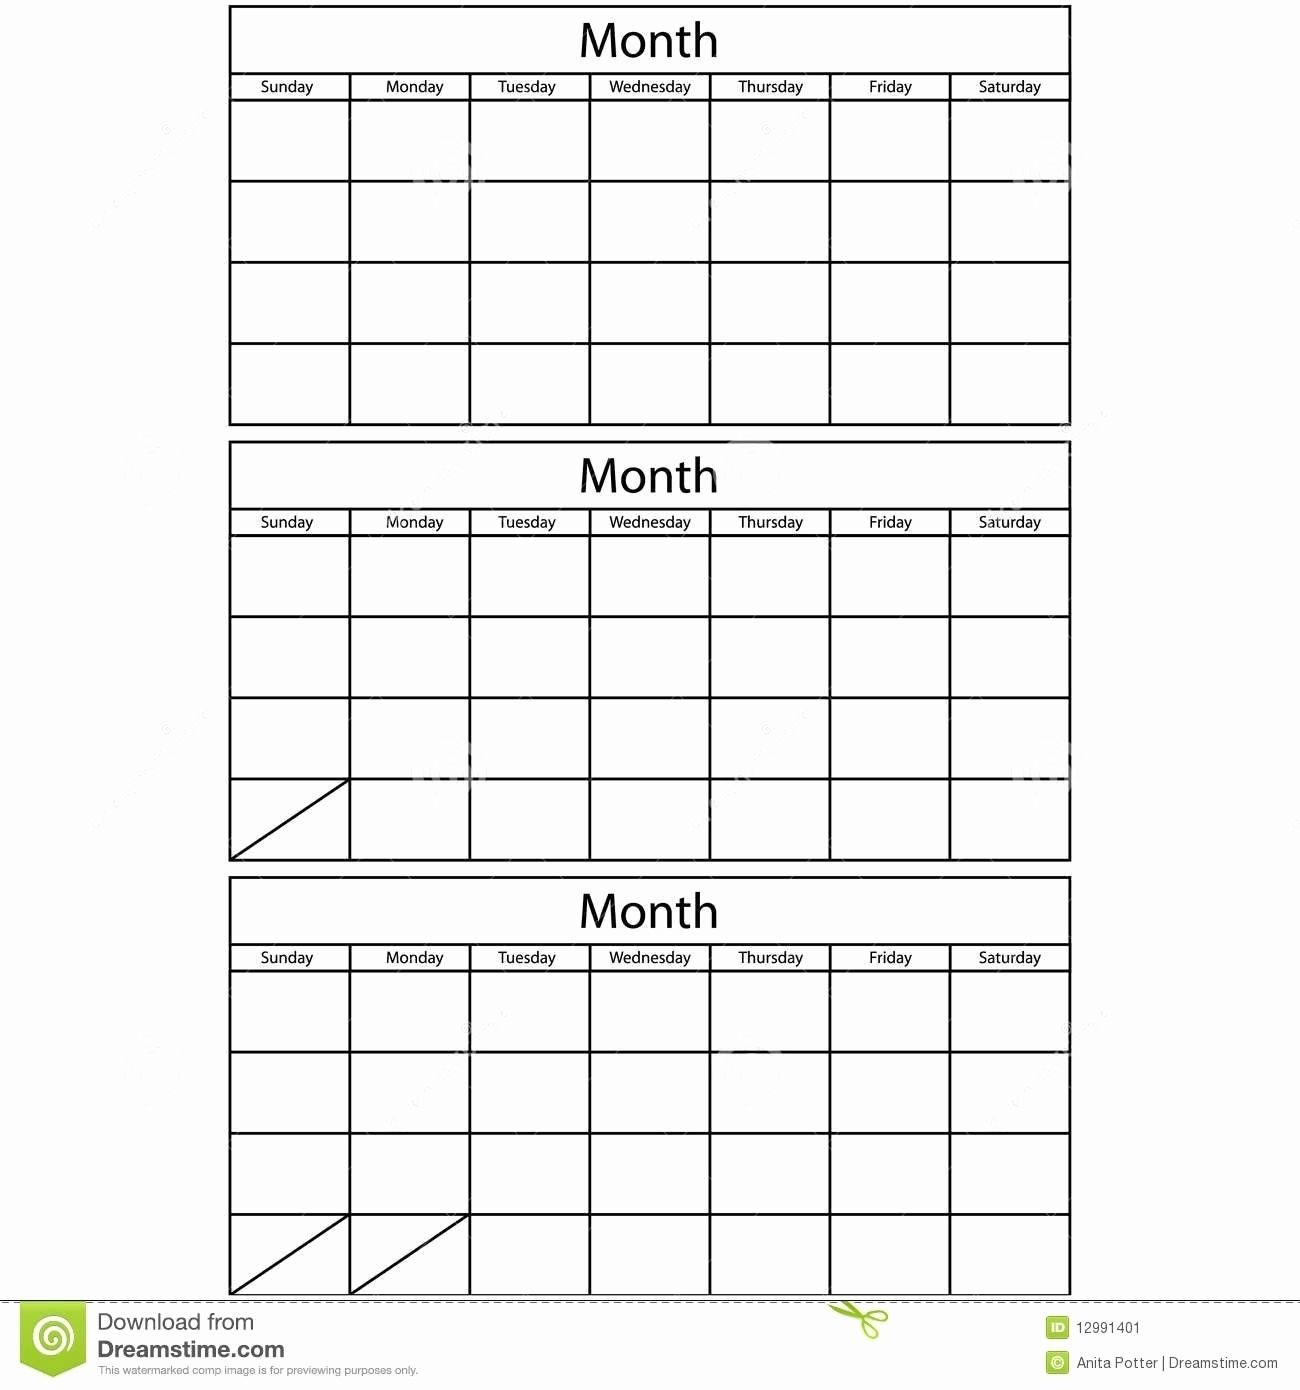 Free 3 Month Calendar Templates  Calendar Inspiration for 3 Month Calendar Template